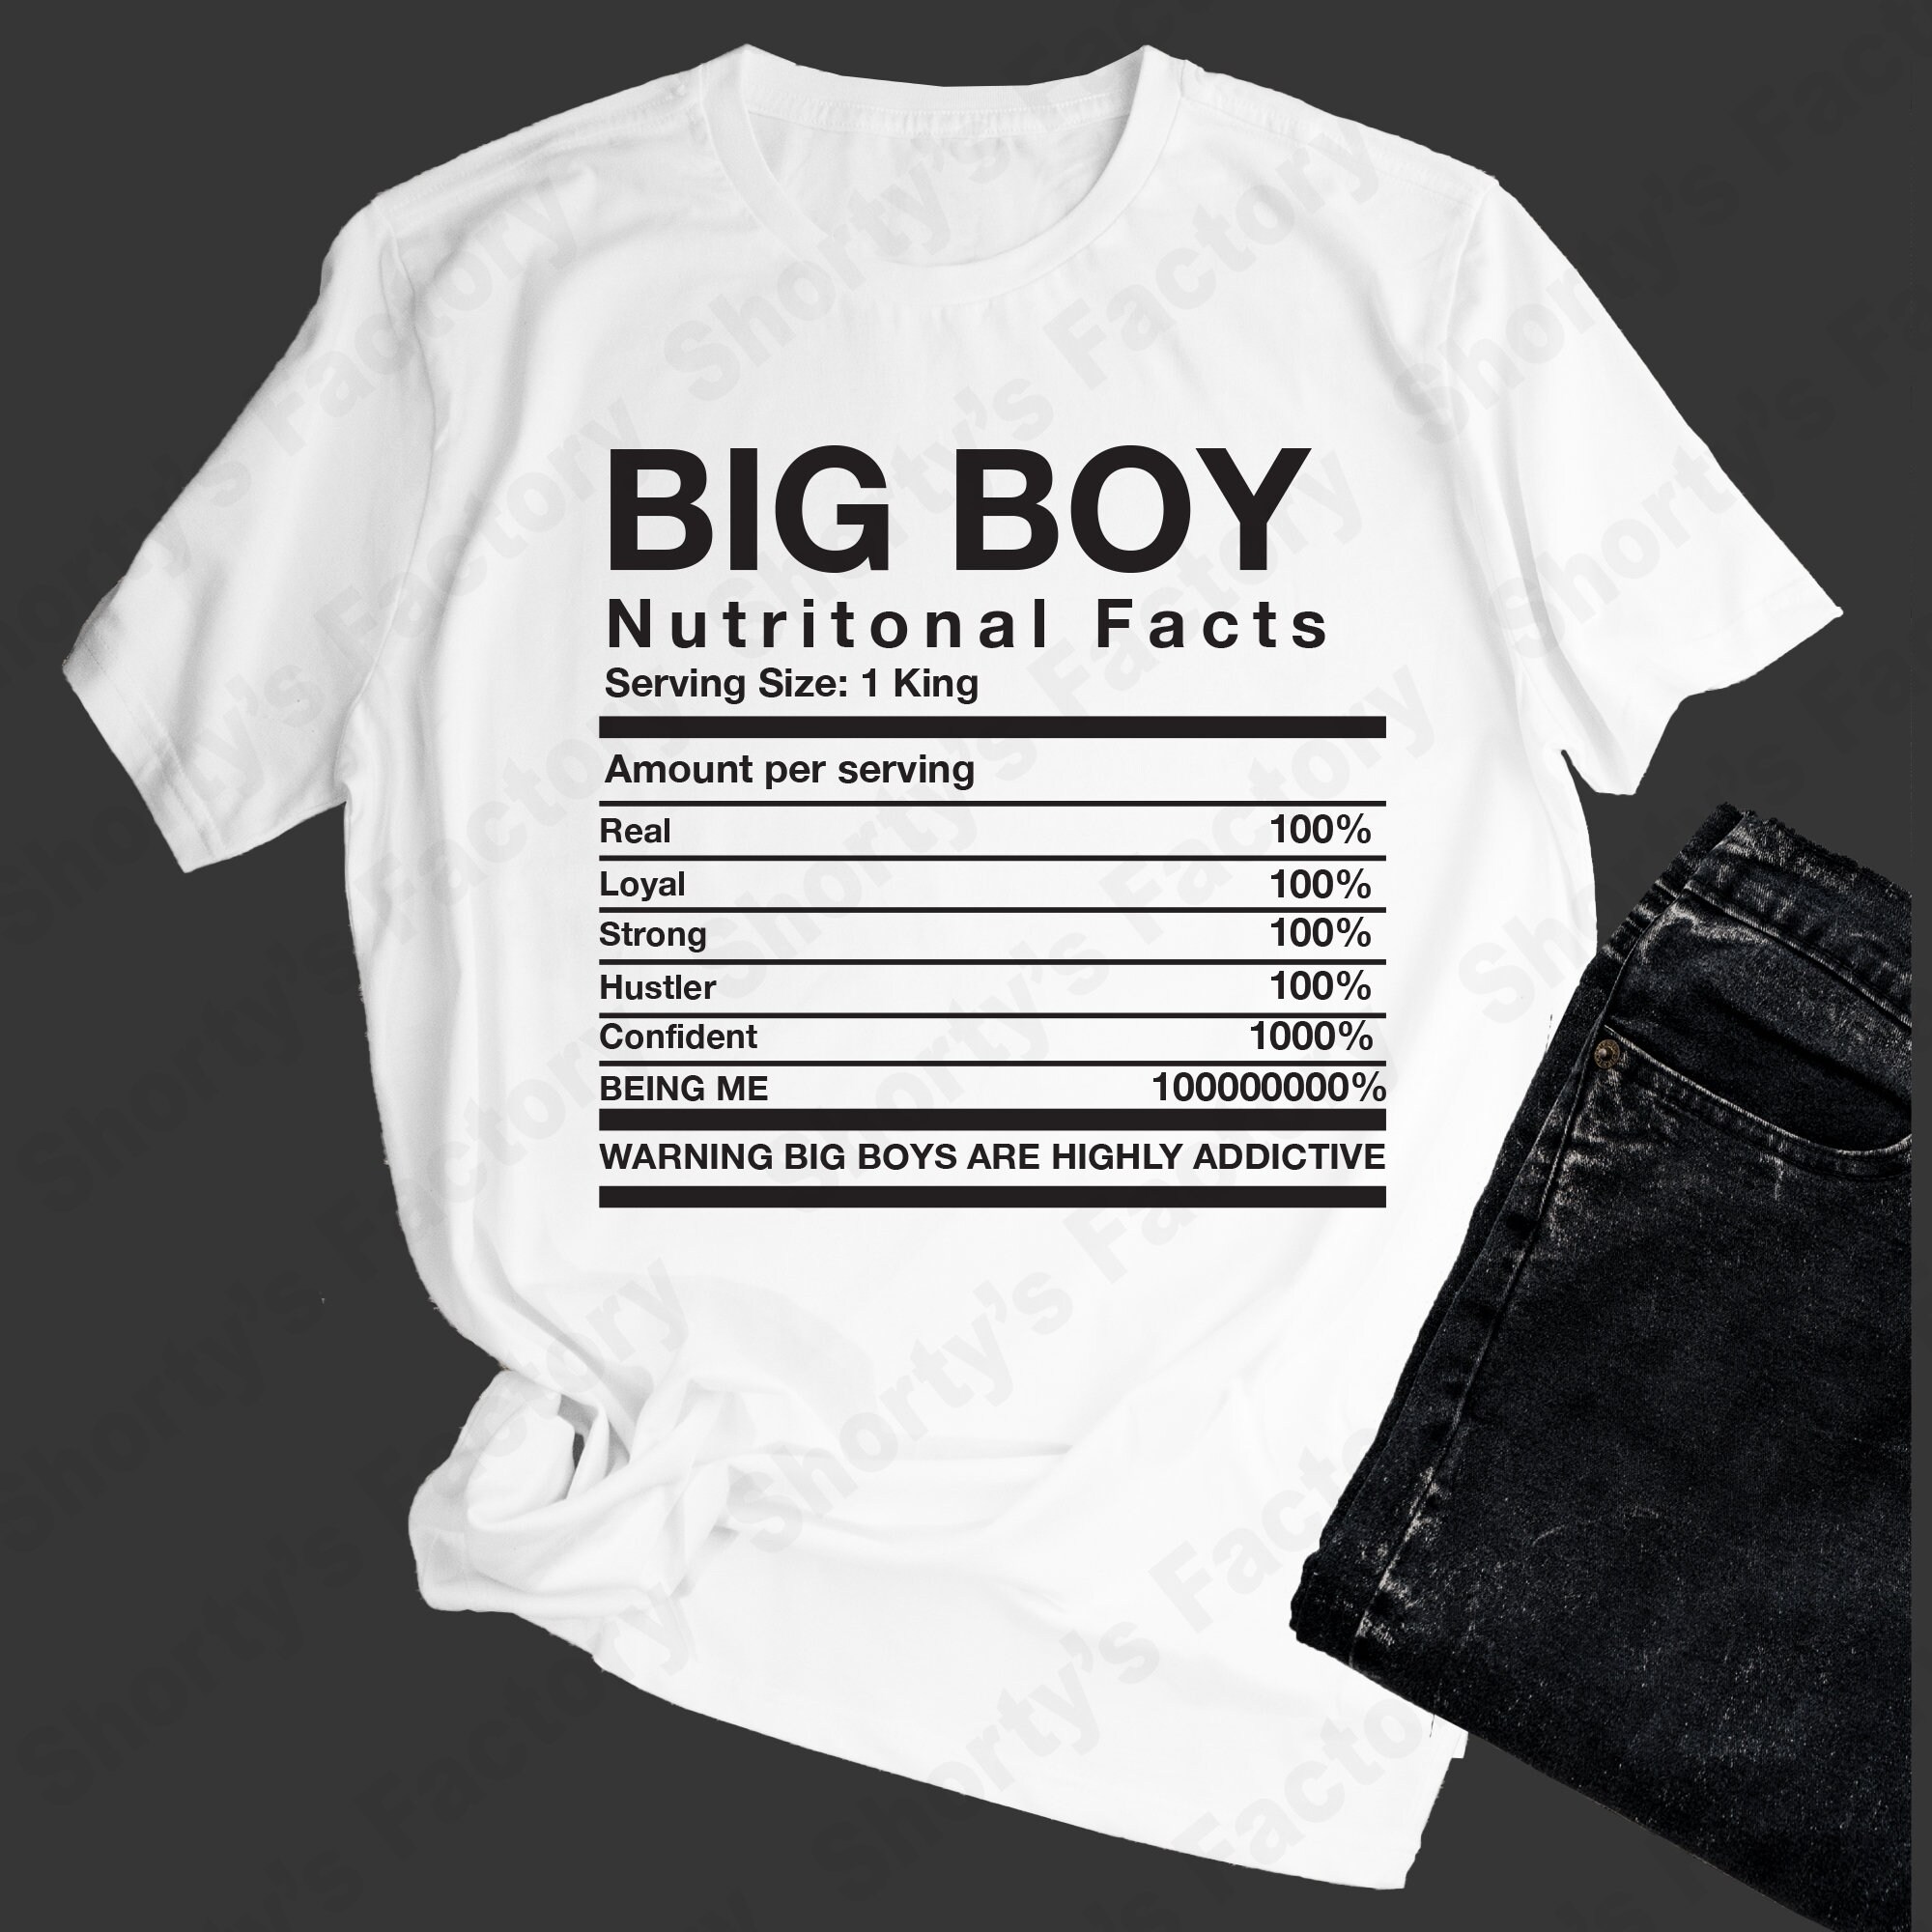 USA HISTORY: Big Boy Purchase Tomorrow' Men's T-Shirt